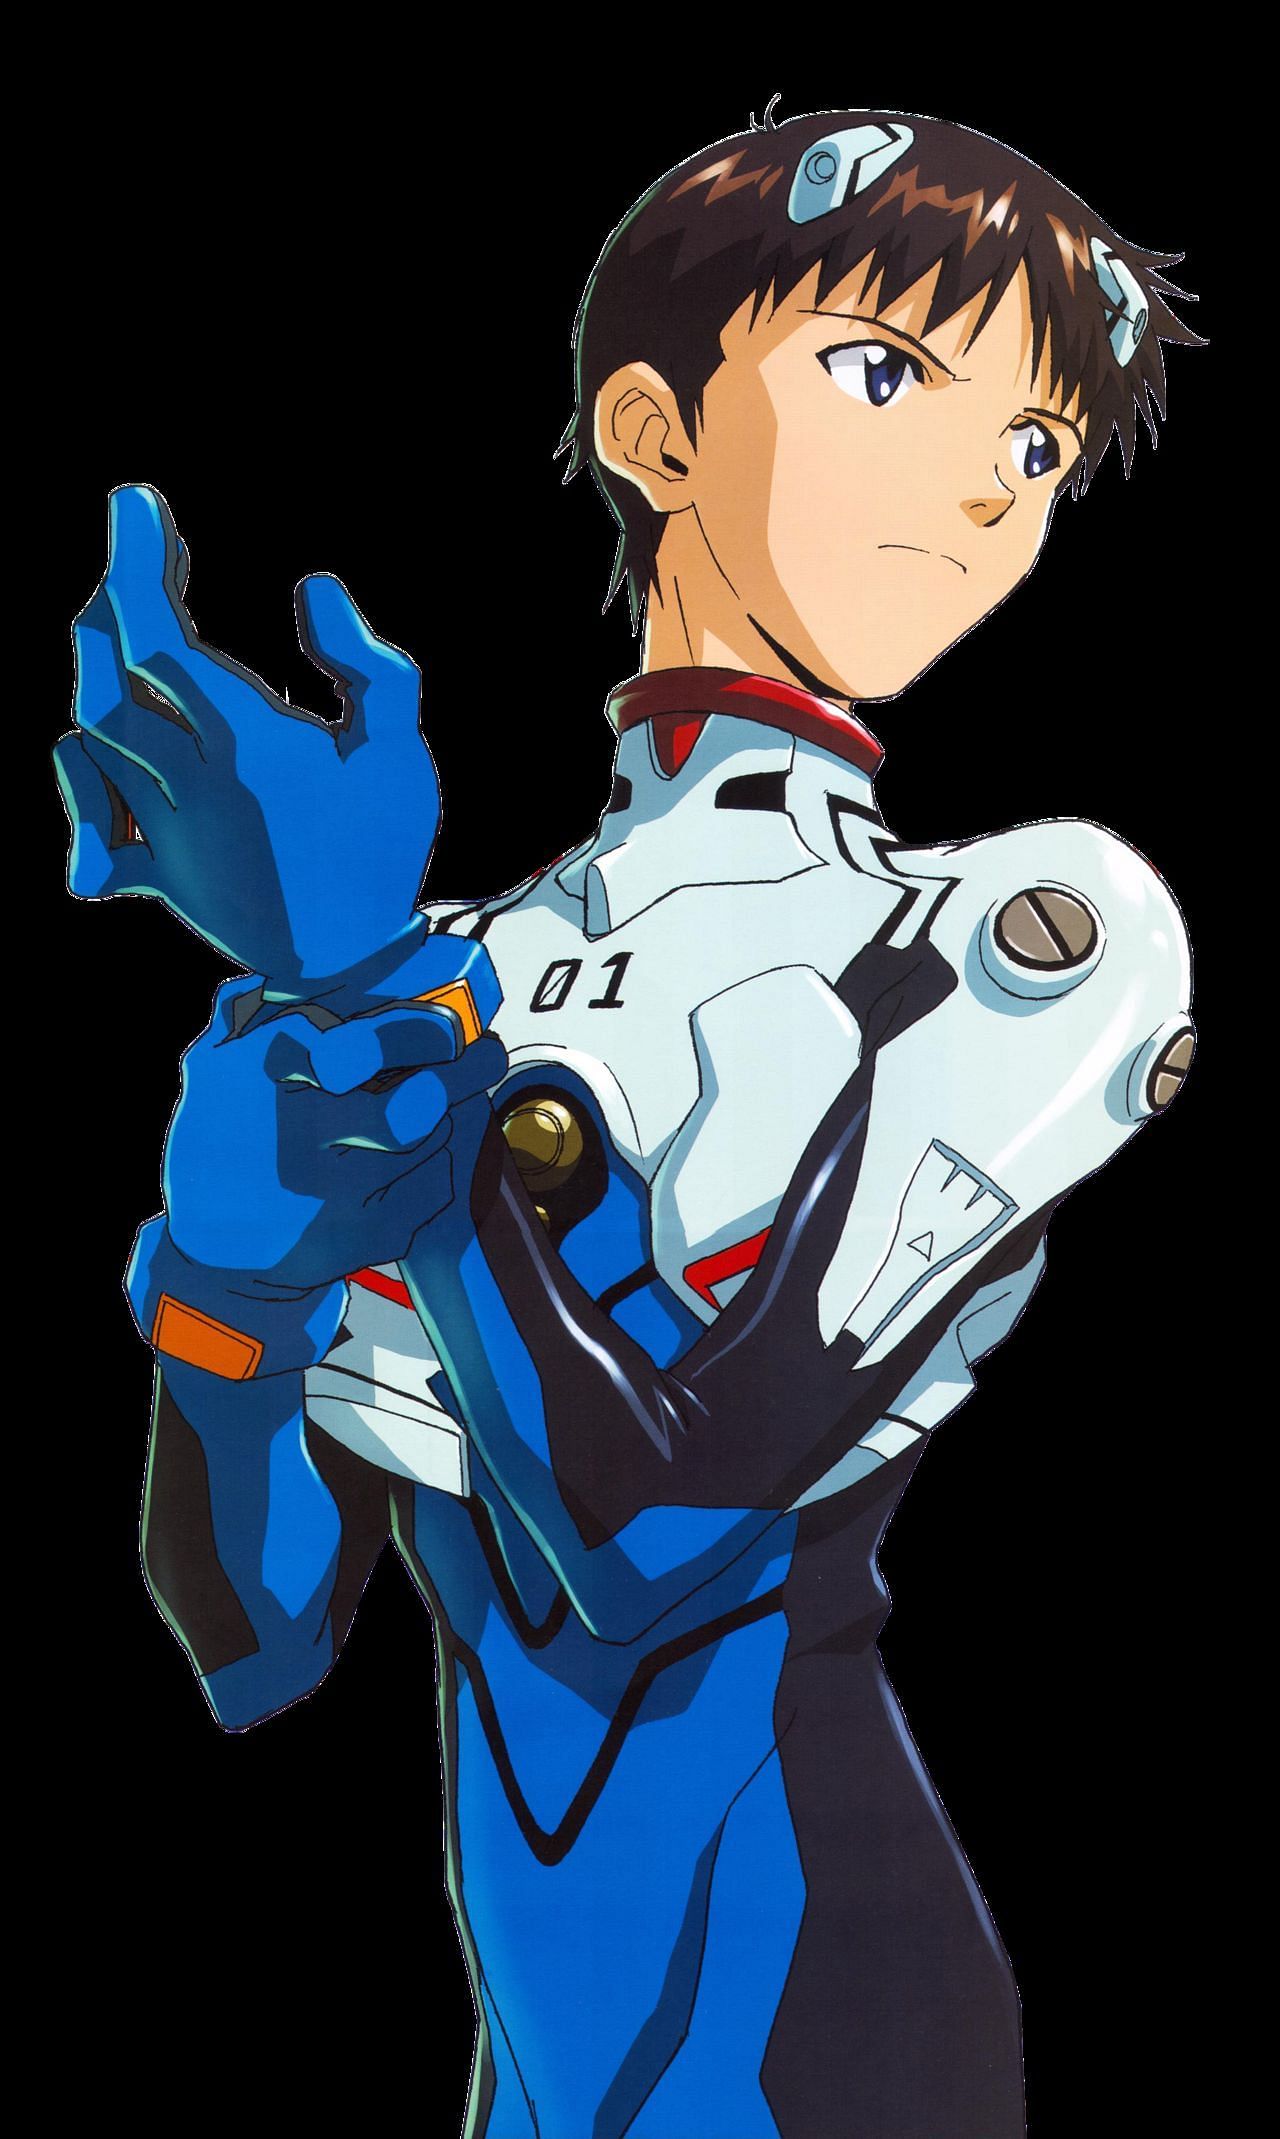 Shinji Ikari in Rebuild of Evangelion (Image via Studio Khara)